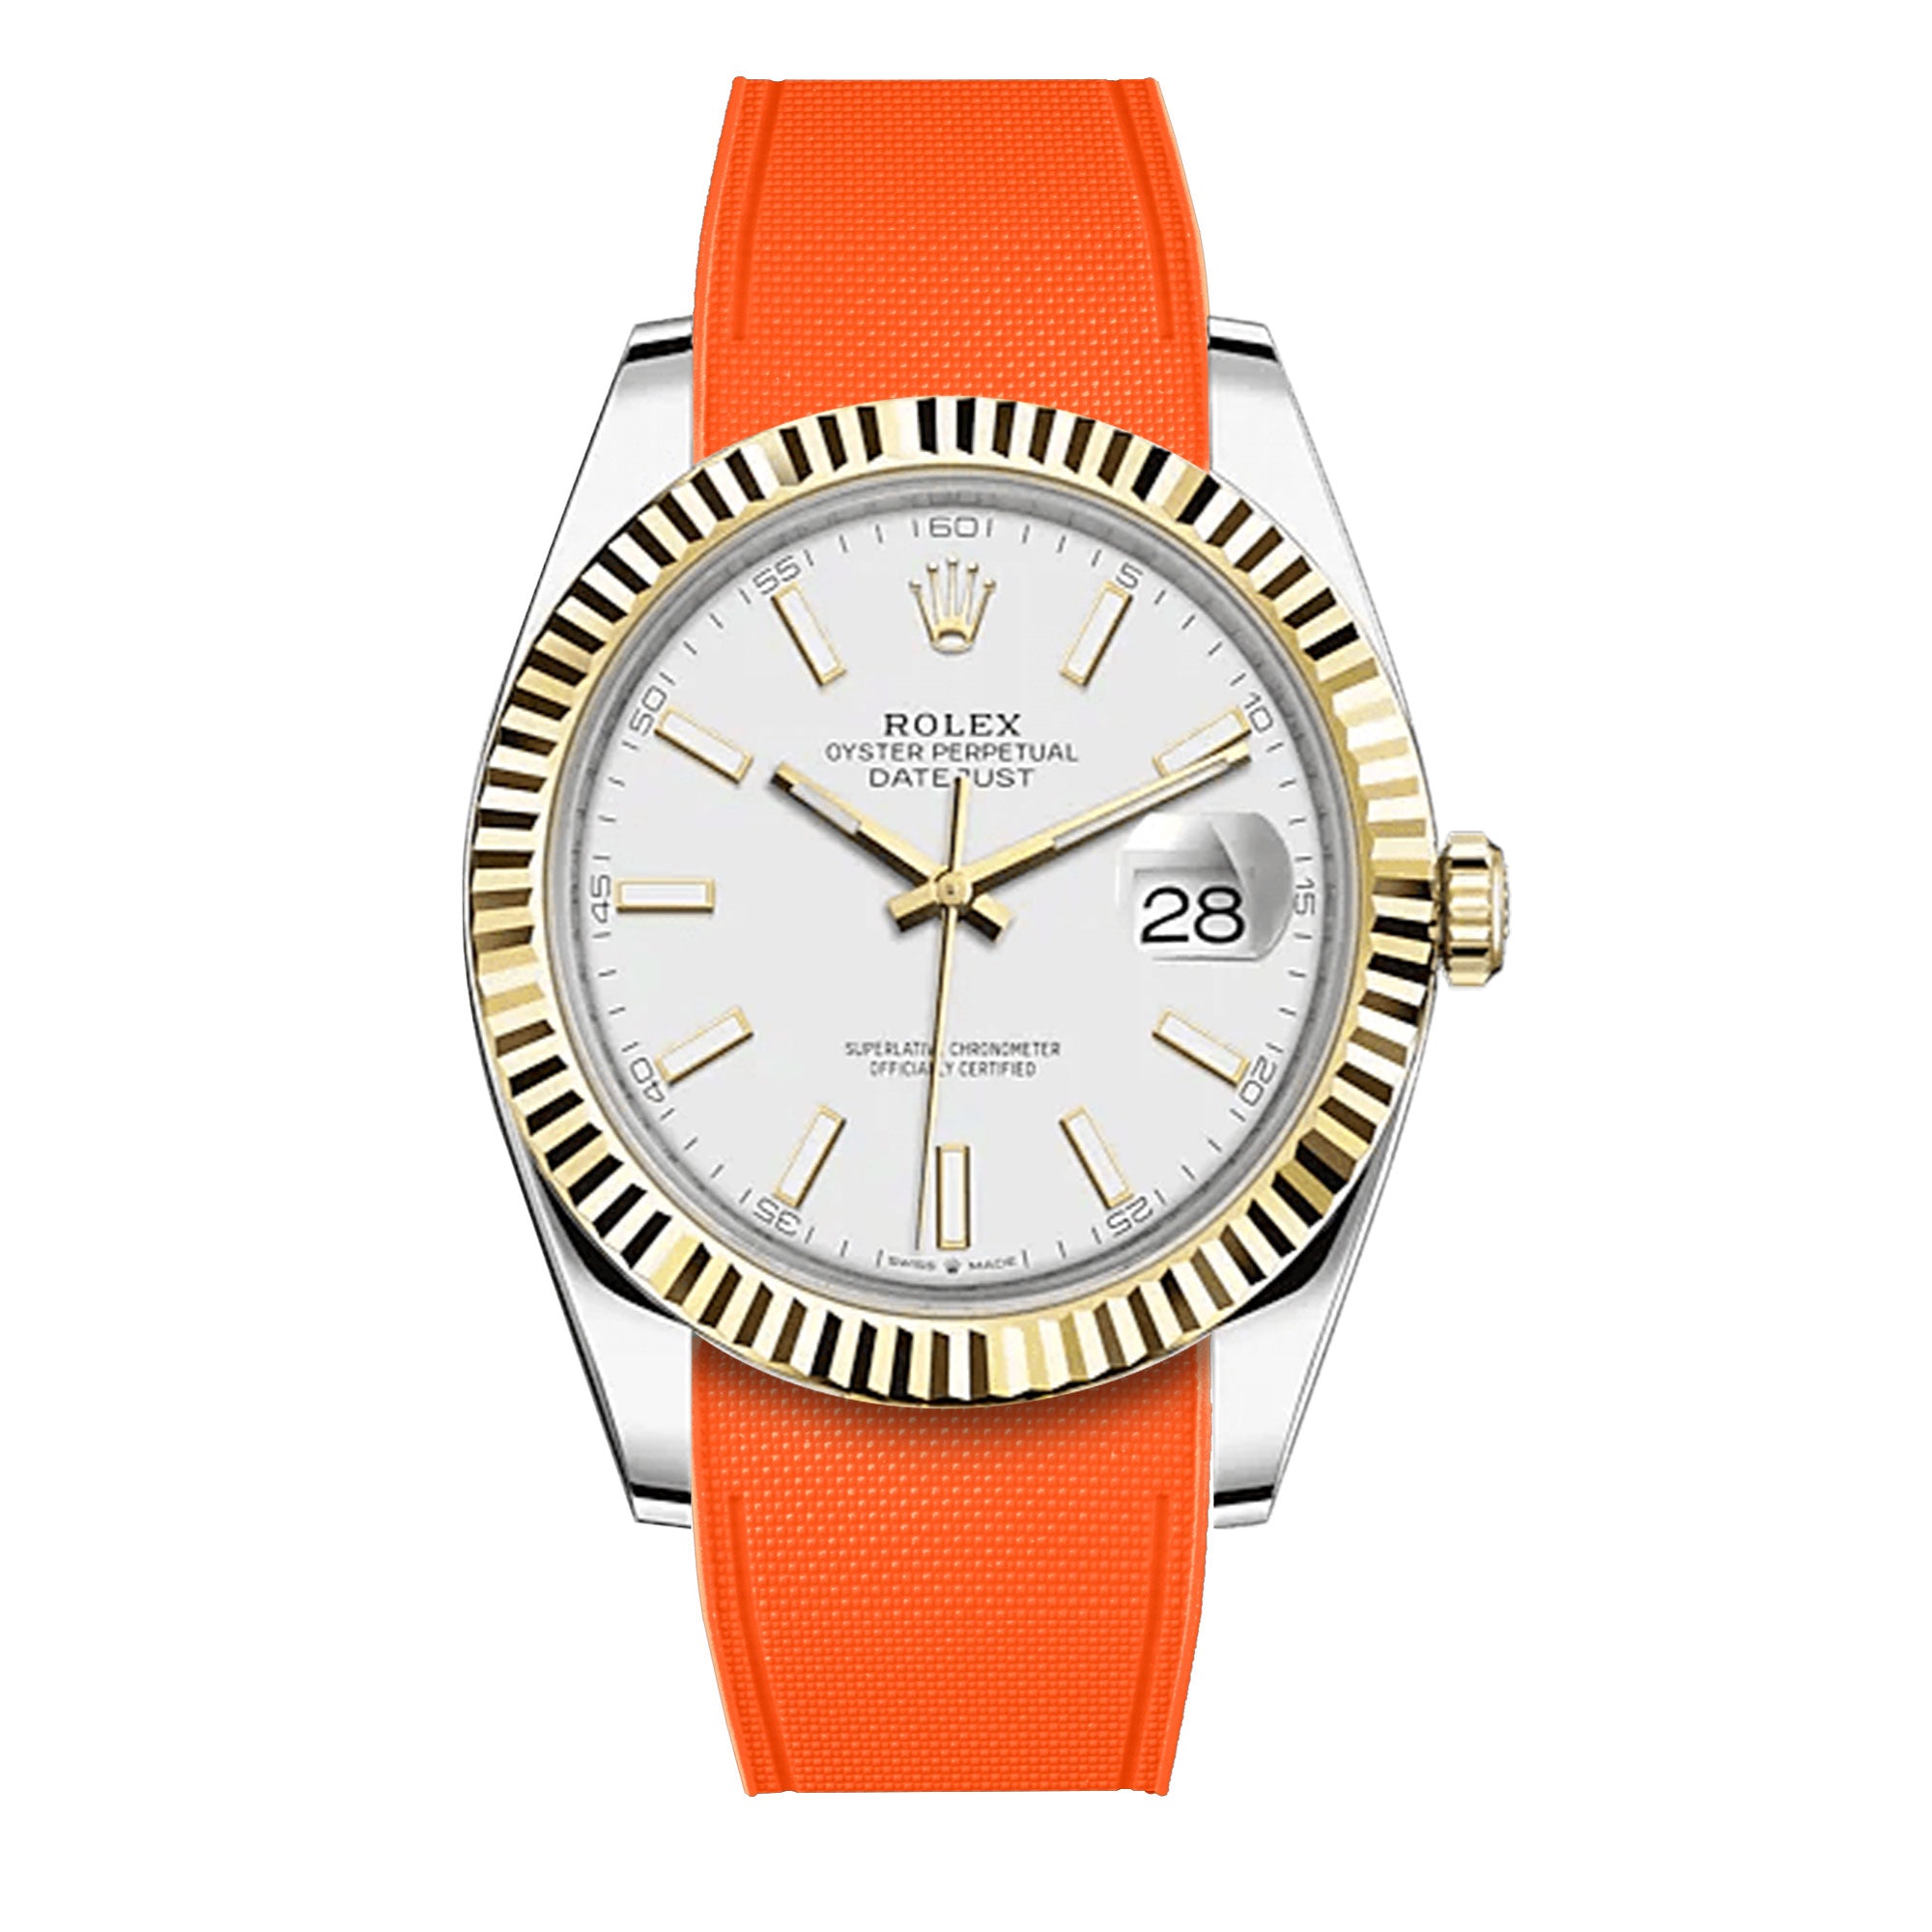 ​Rolex - R Strap Premium – Cordura pattern rubber watch band for Datejust 41mm & Oyster bracelet